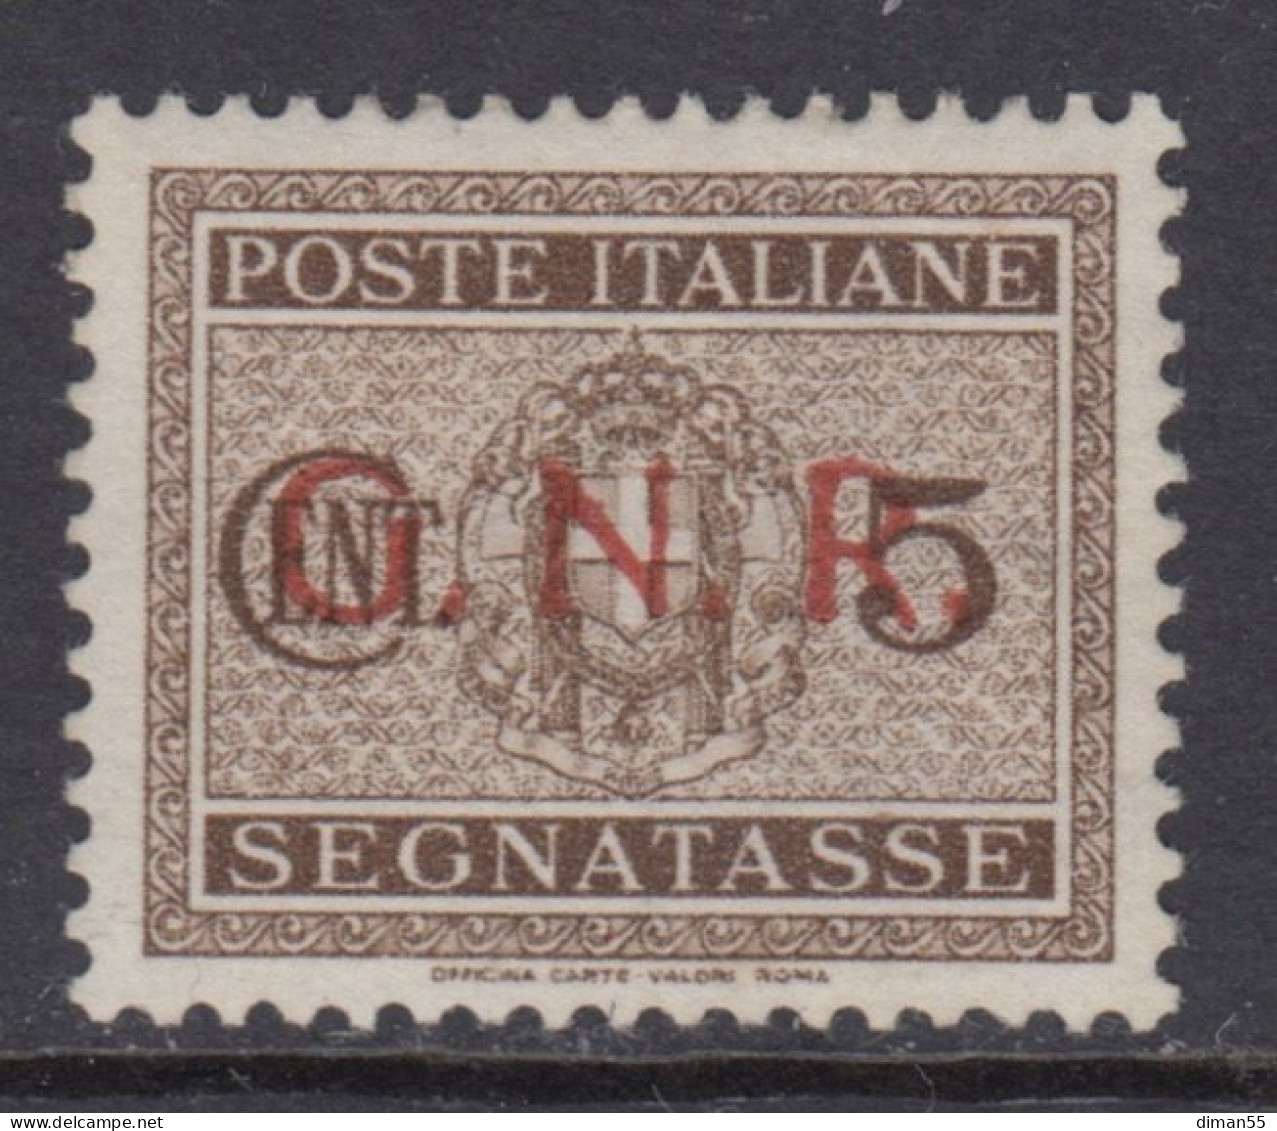 ITALY - 1943 R.S.I. - Tax 47A Cv 1500 Euro - Firmato Oliva - Varietà SOPRASTAMPA ROSSA Anzichè NERA - Segnatasse